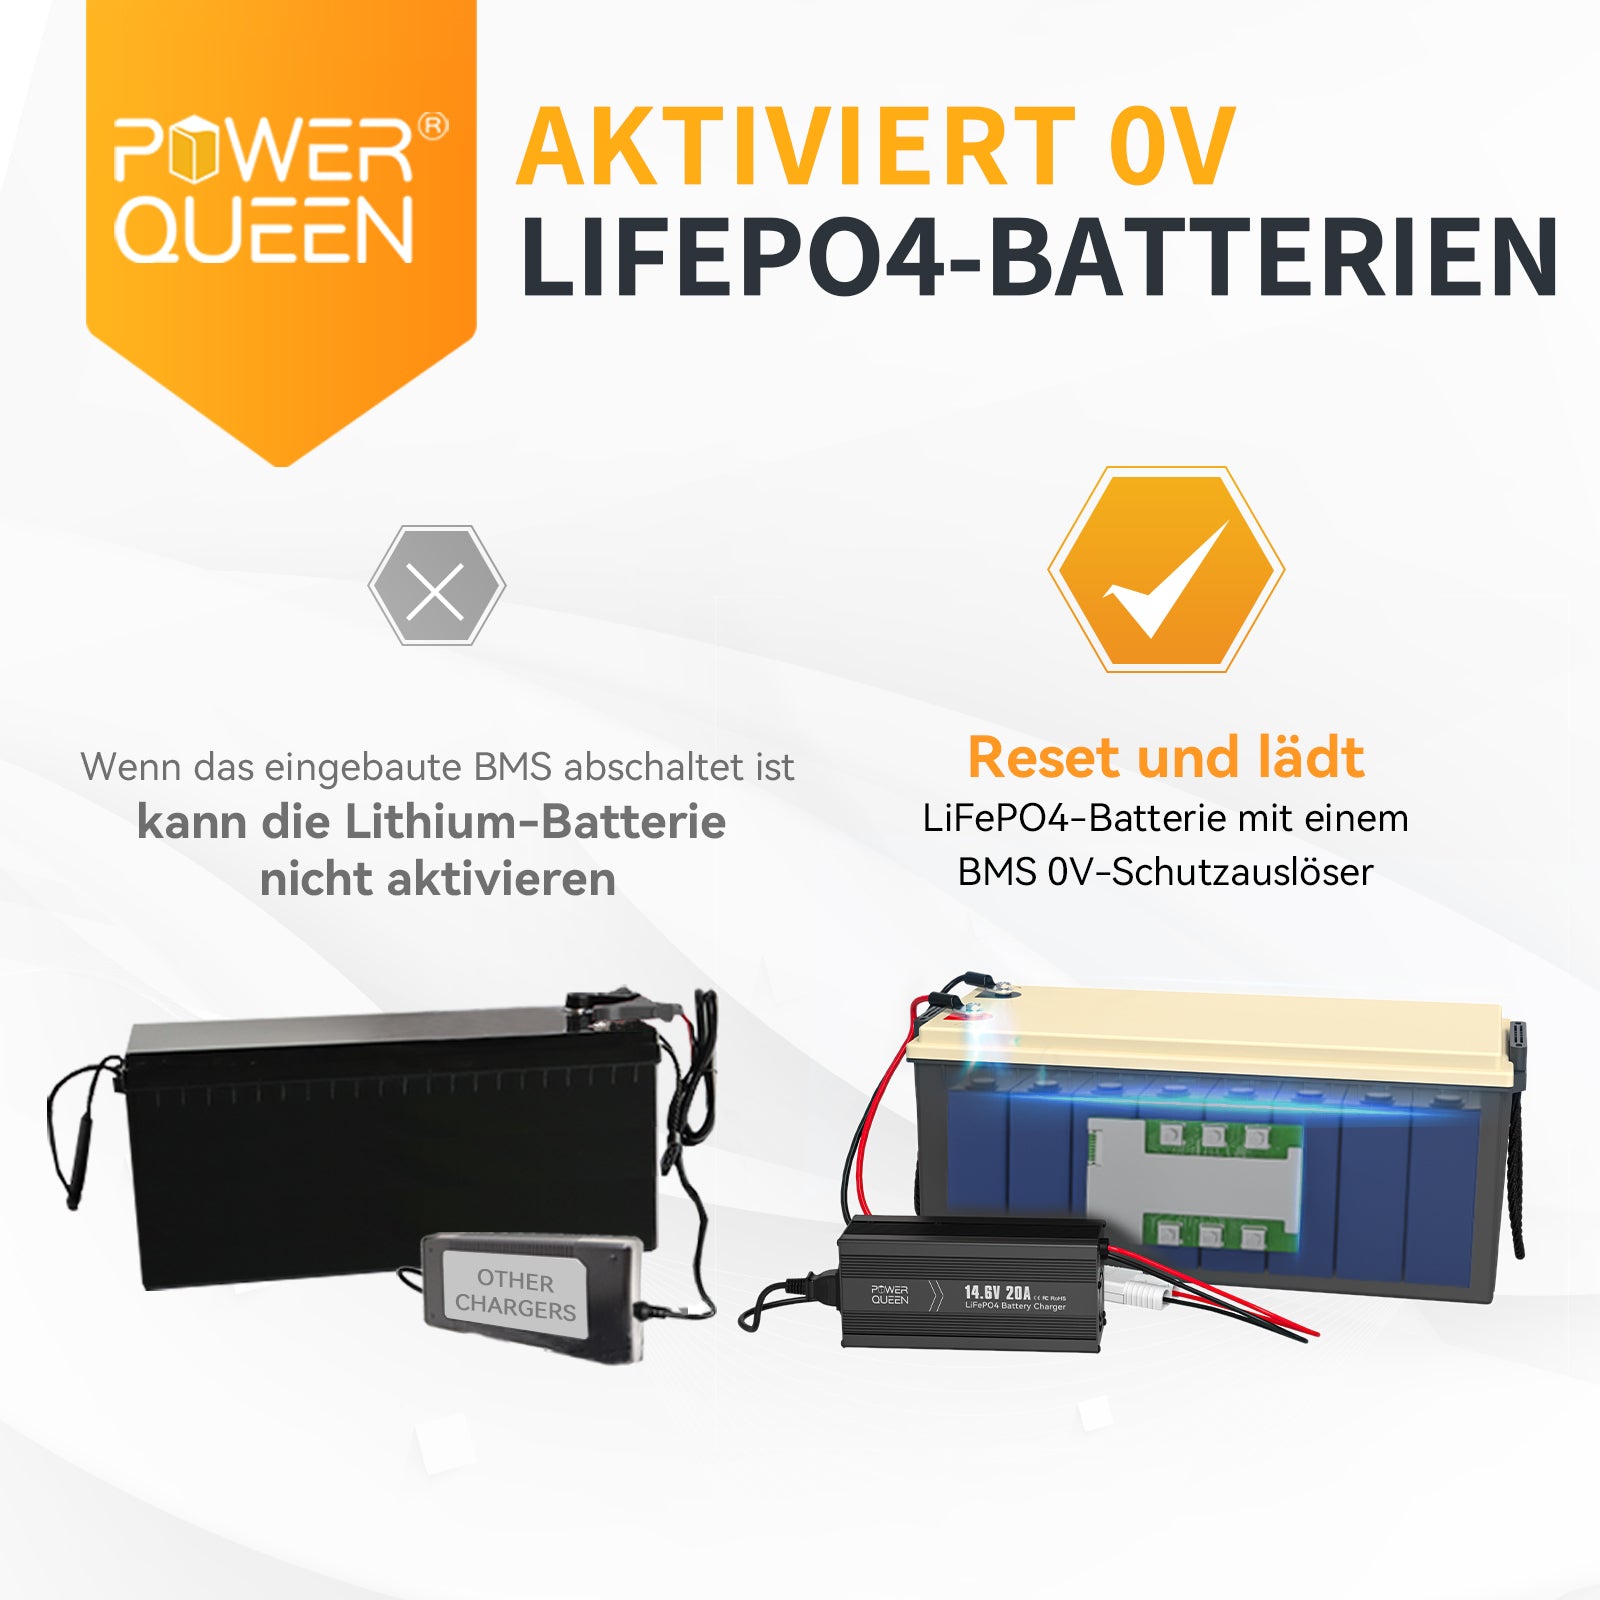 Power Queen 14,6V 20A LiFePO4 Ladegerät für 12V LiFePO4-Batterie